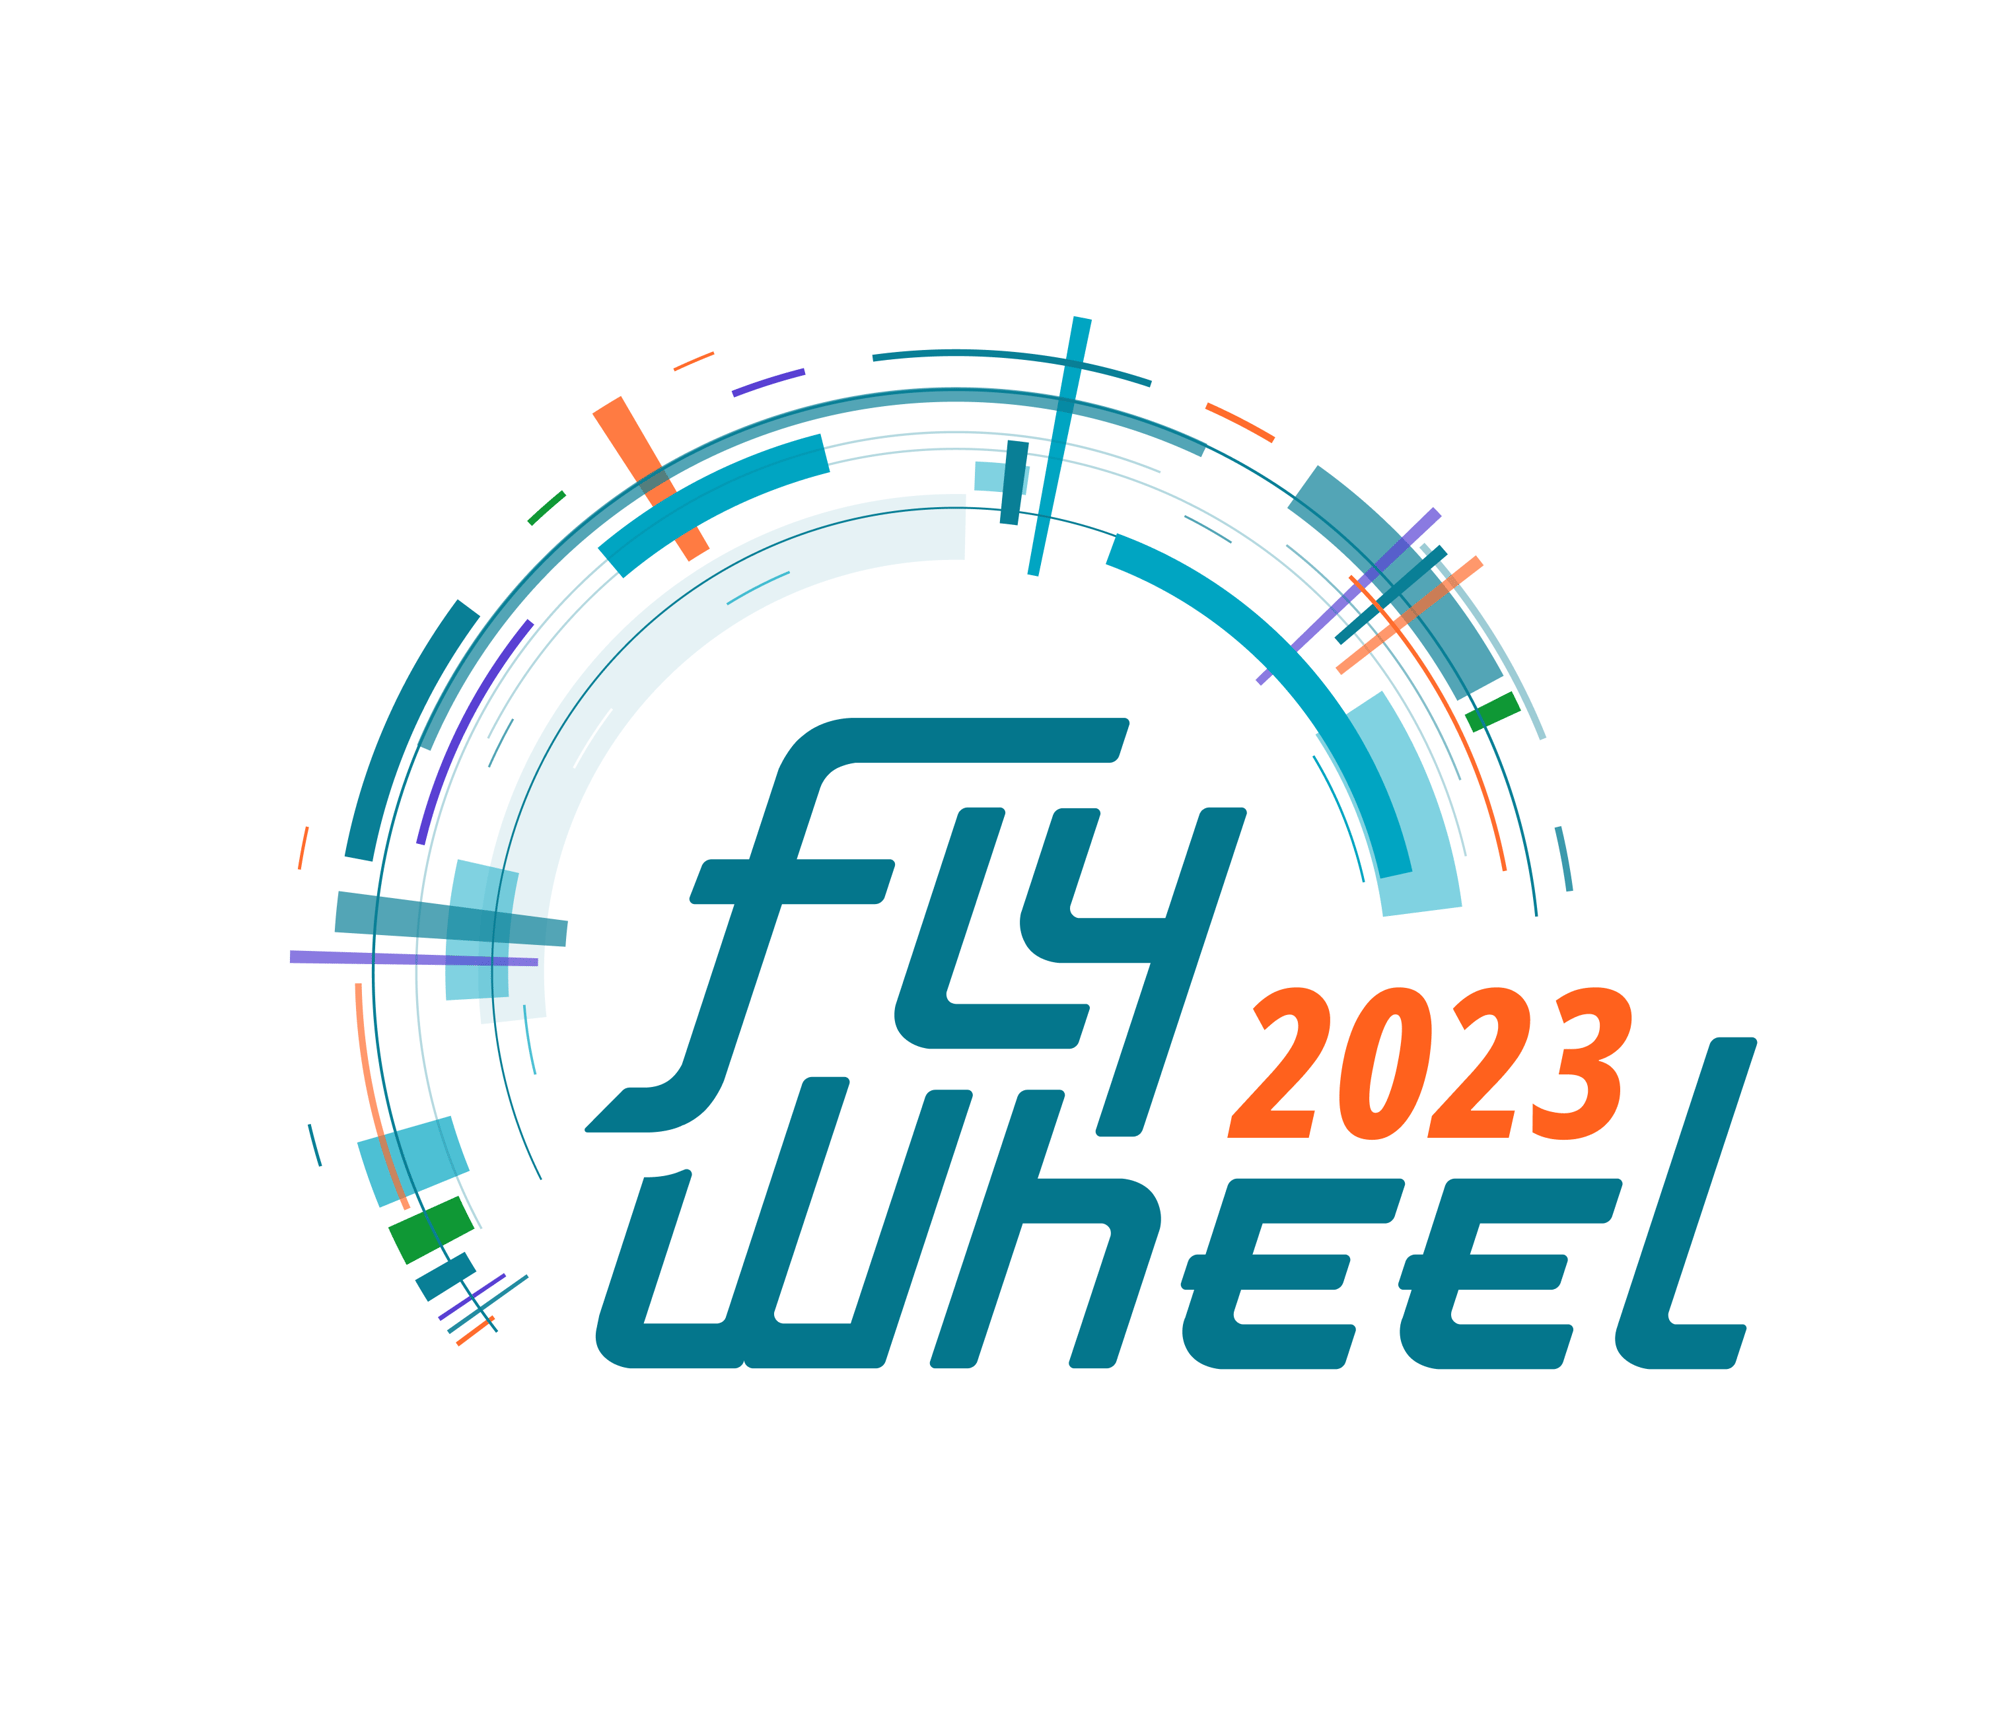 Flywheel 2023 white background